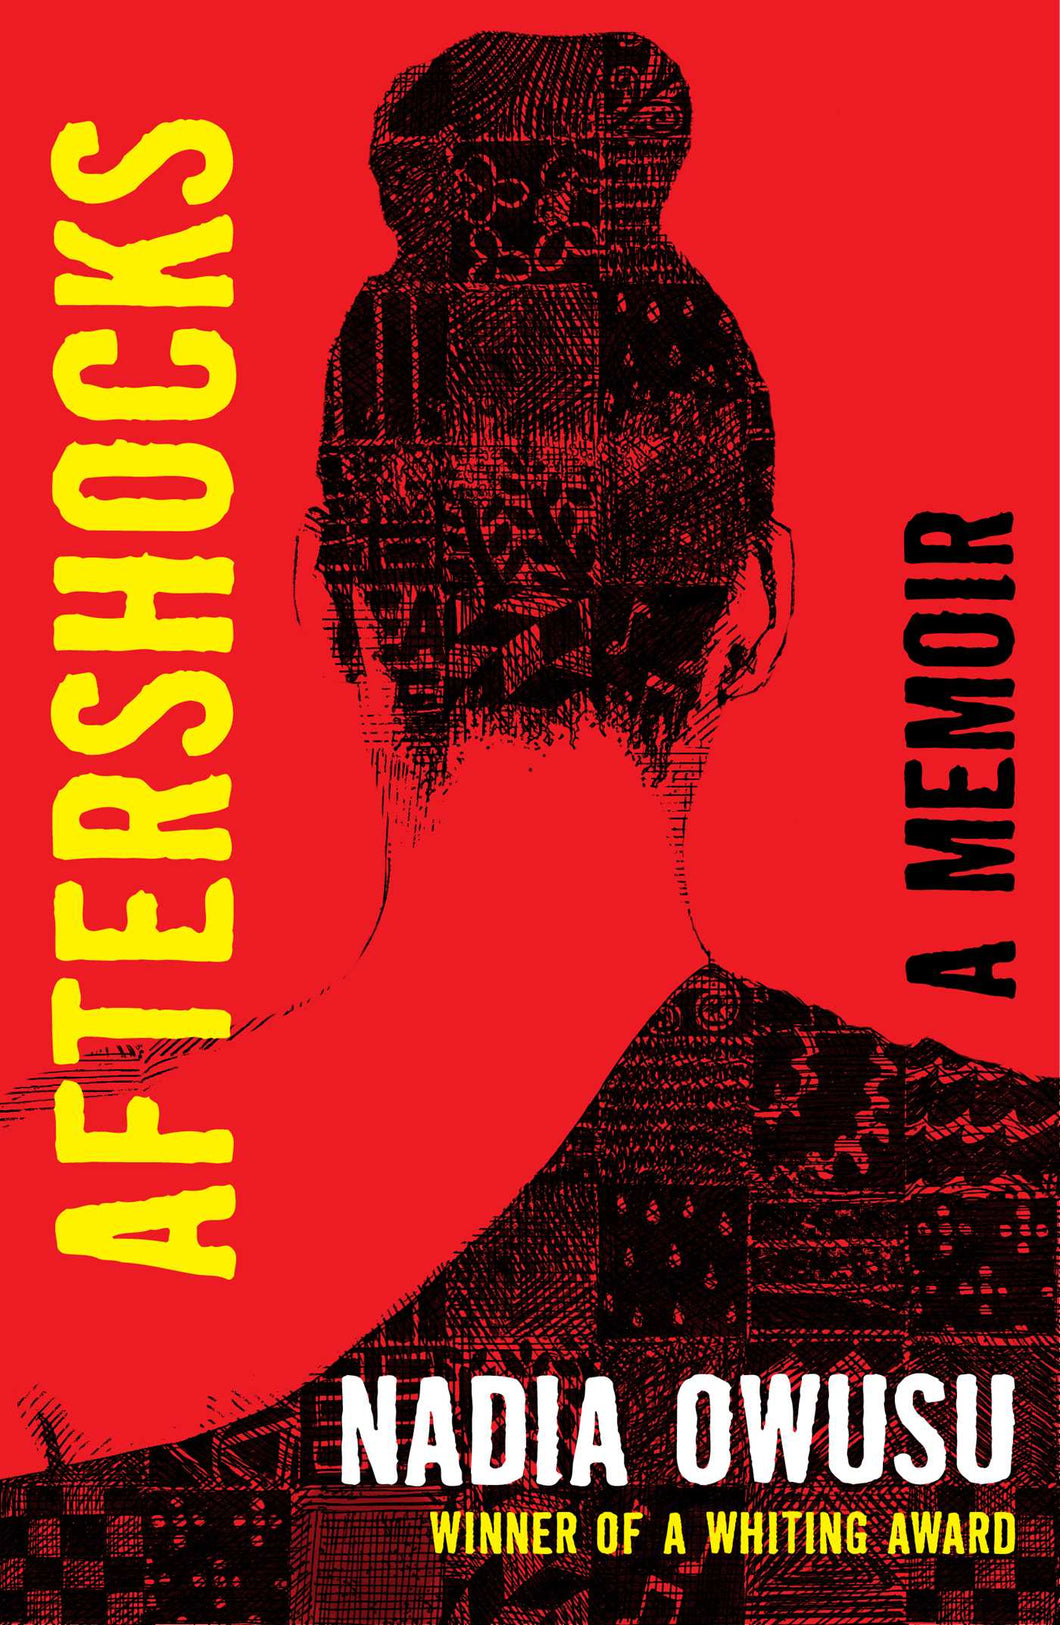 Aftershocks: A Memoir by Nadia Owusu / Hardcover or Paperback - NEW OR USED BOOK OR BOOK BOX